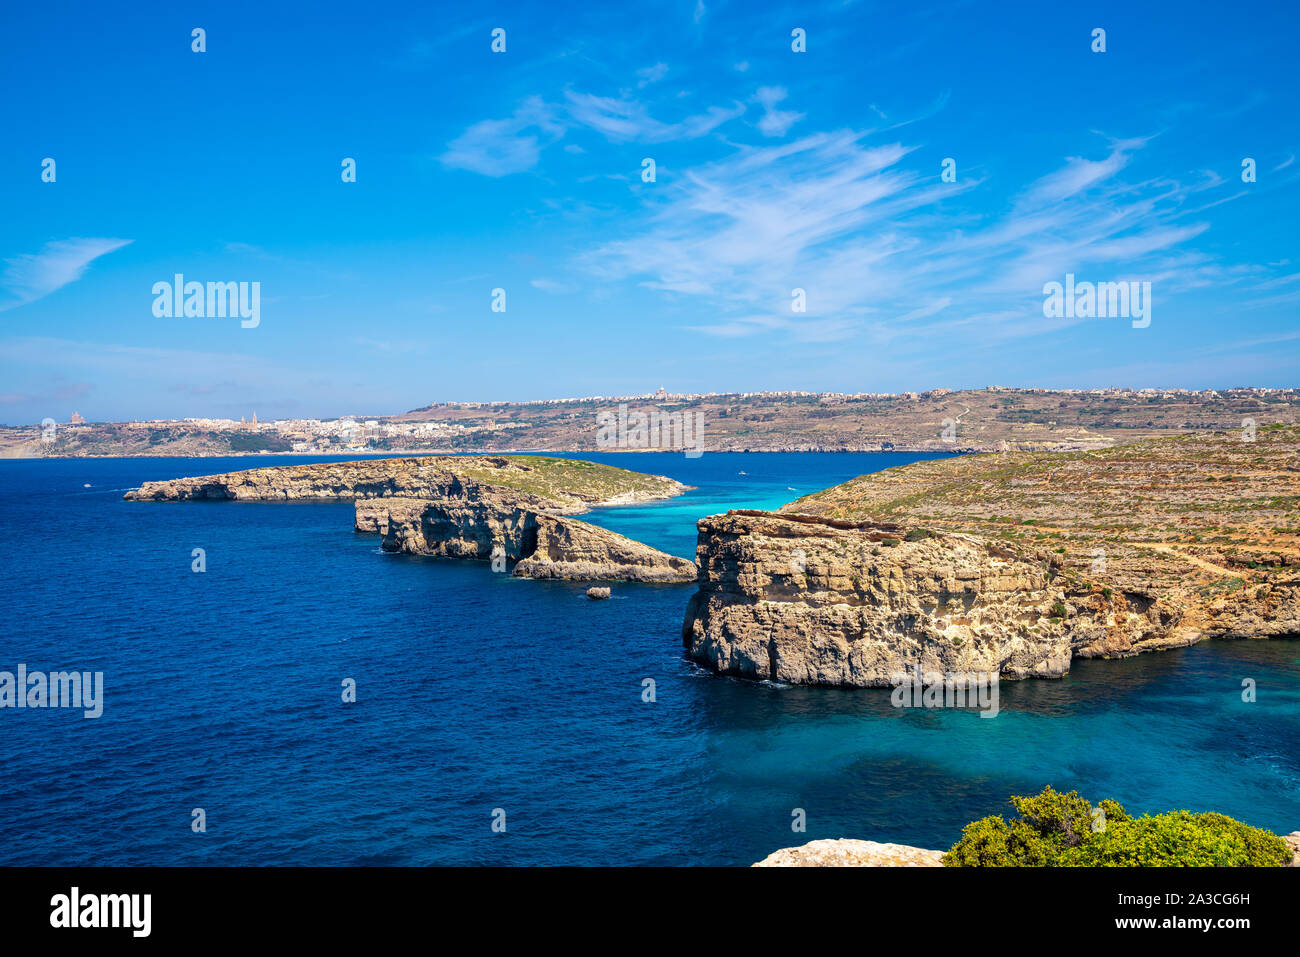 Stone cliffs on the blue lagoon of the island of Comino and Gozo Malta.  Mediterranean Sea Stock Photo - Alamy